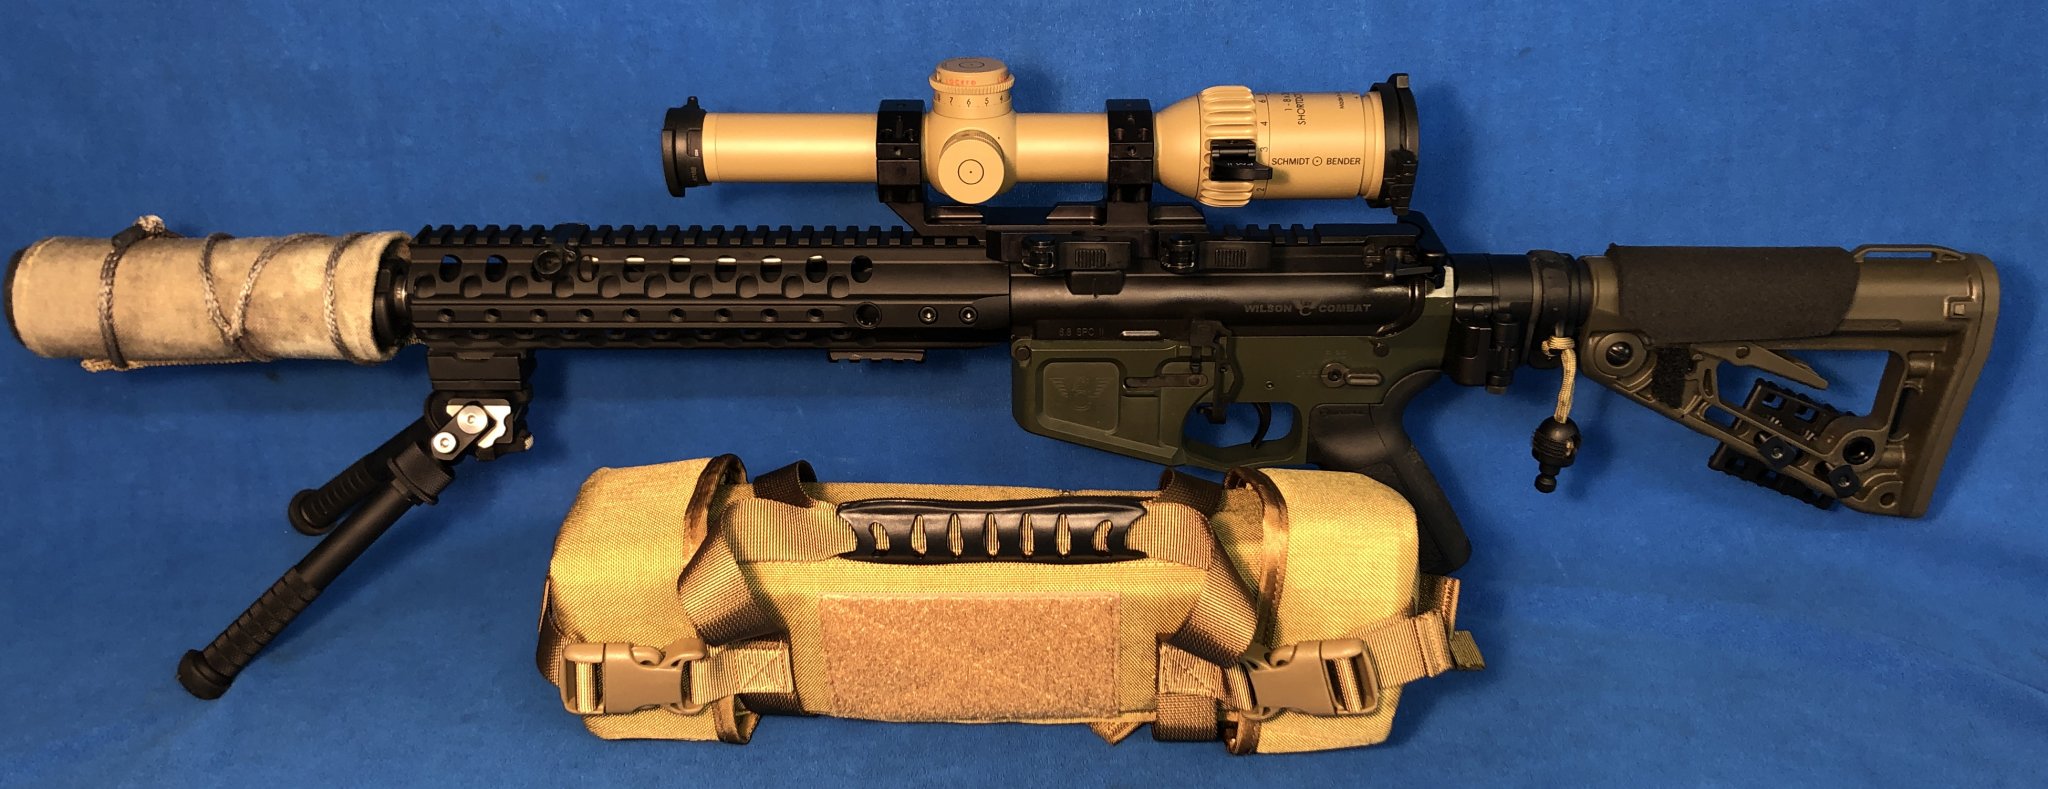 Rifle Scopes Finally Arrived S B Short Dot Dual CC Sniper S Hide Forum